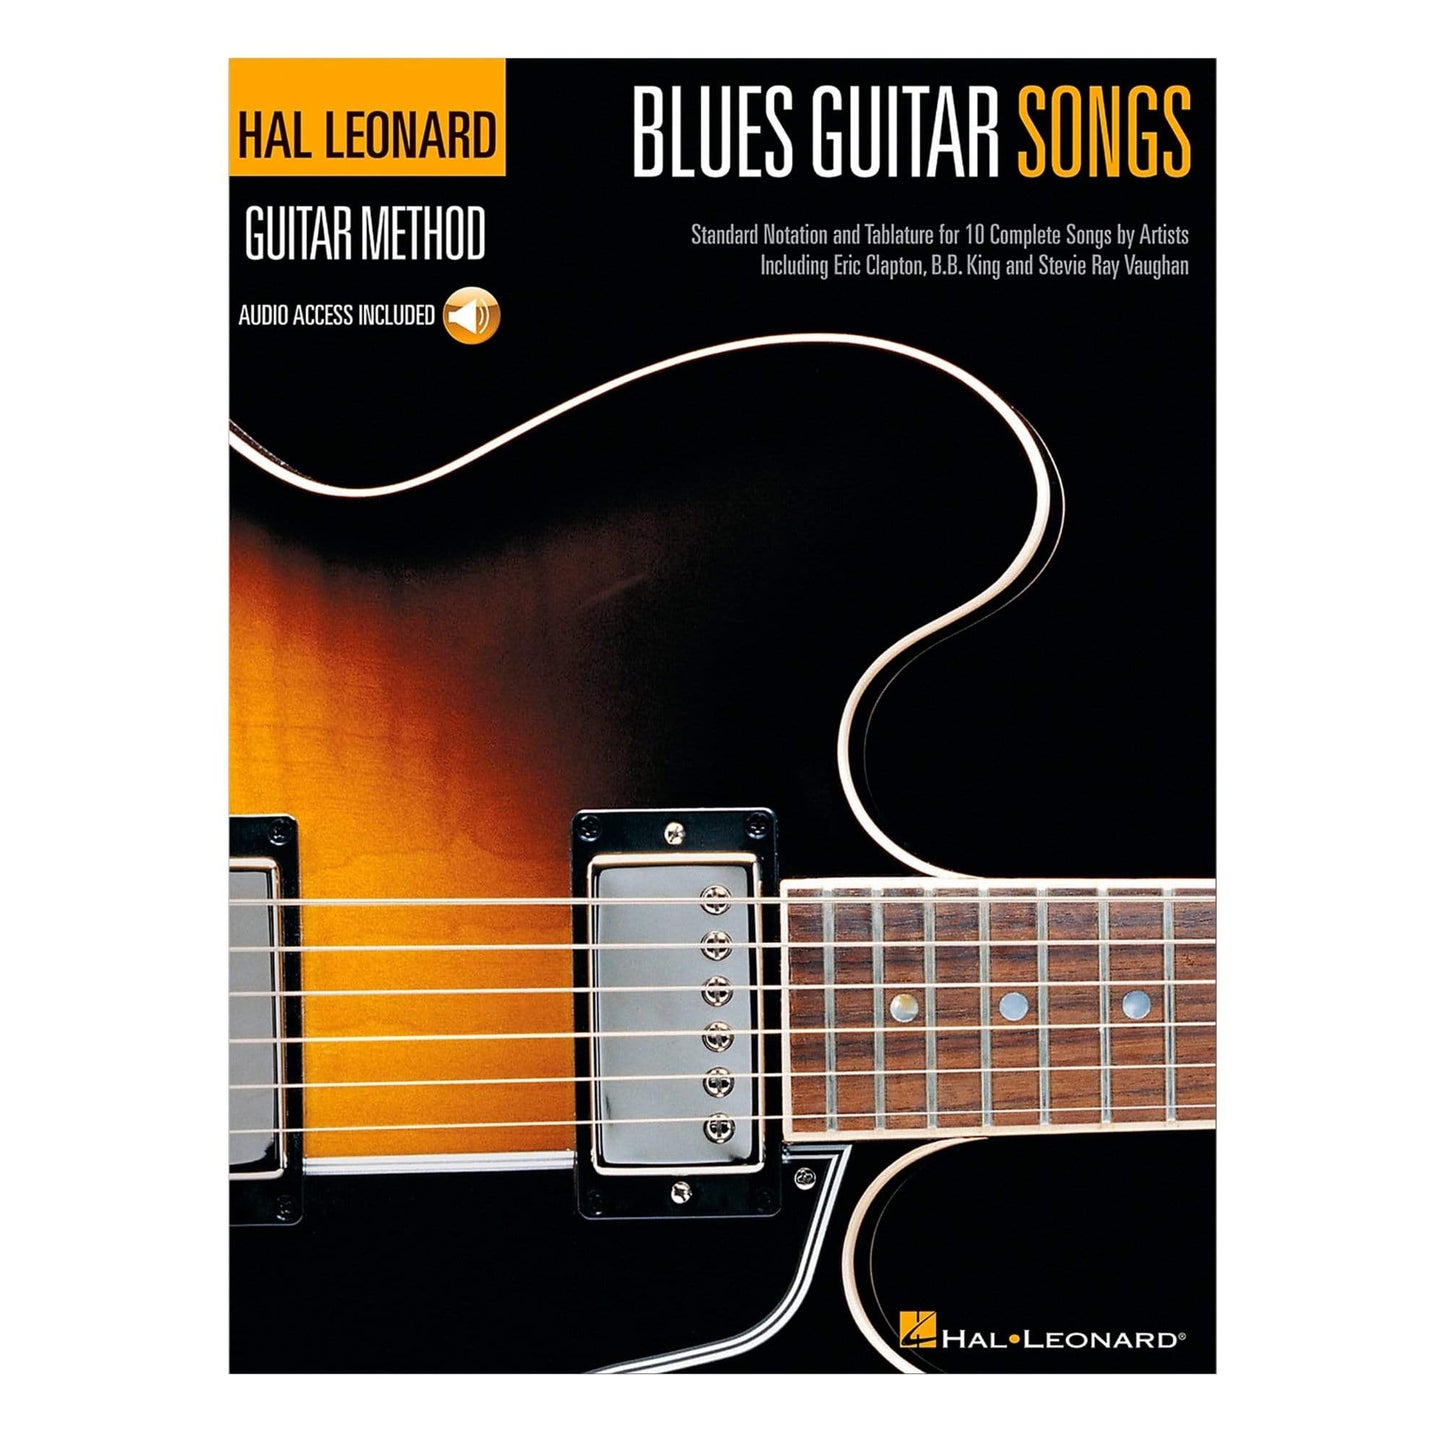 Hal Leonard "Guitar Method" Blues Guitar Book Accessories / Merchandise